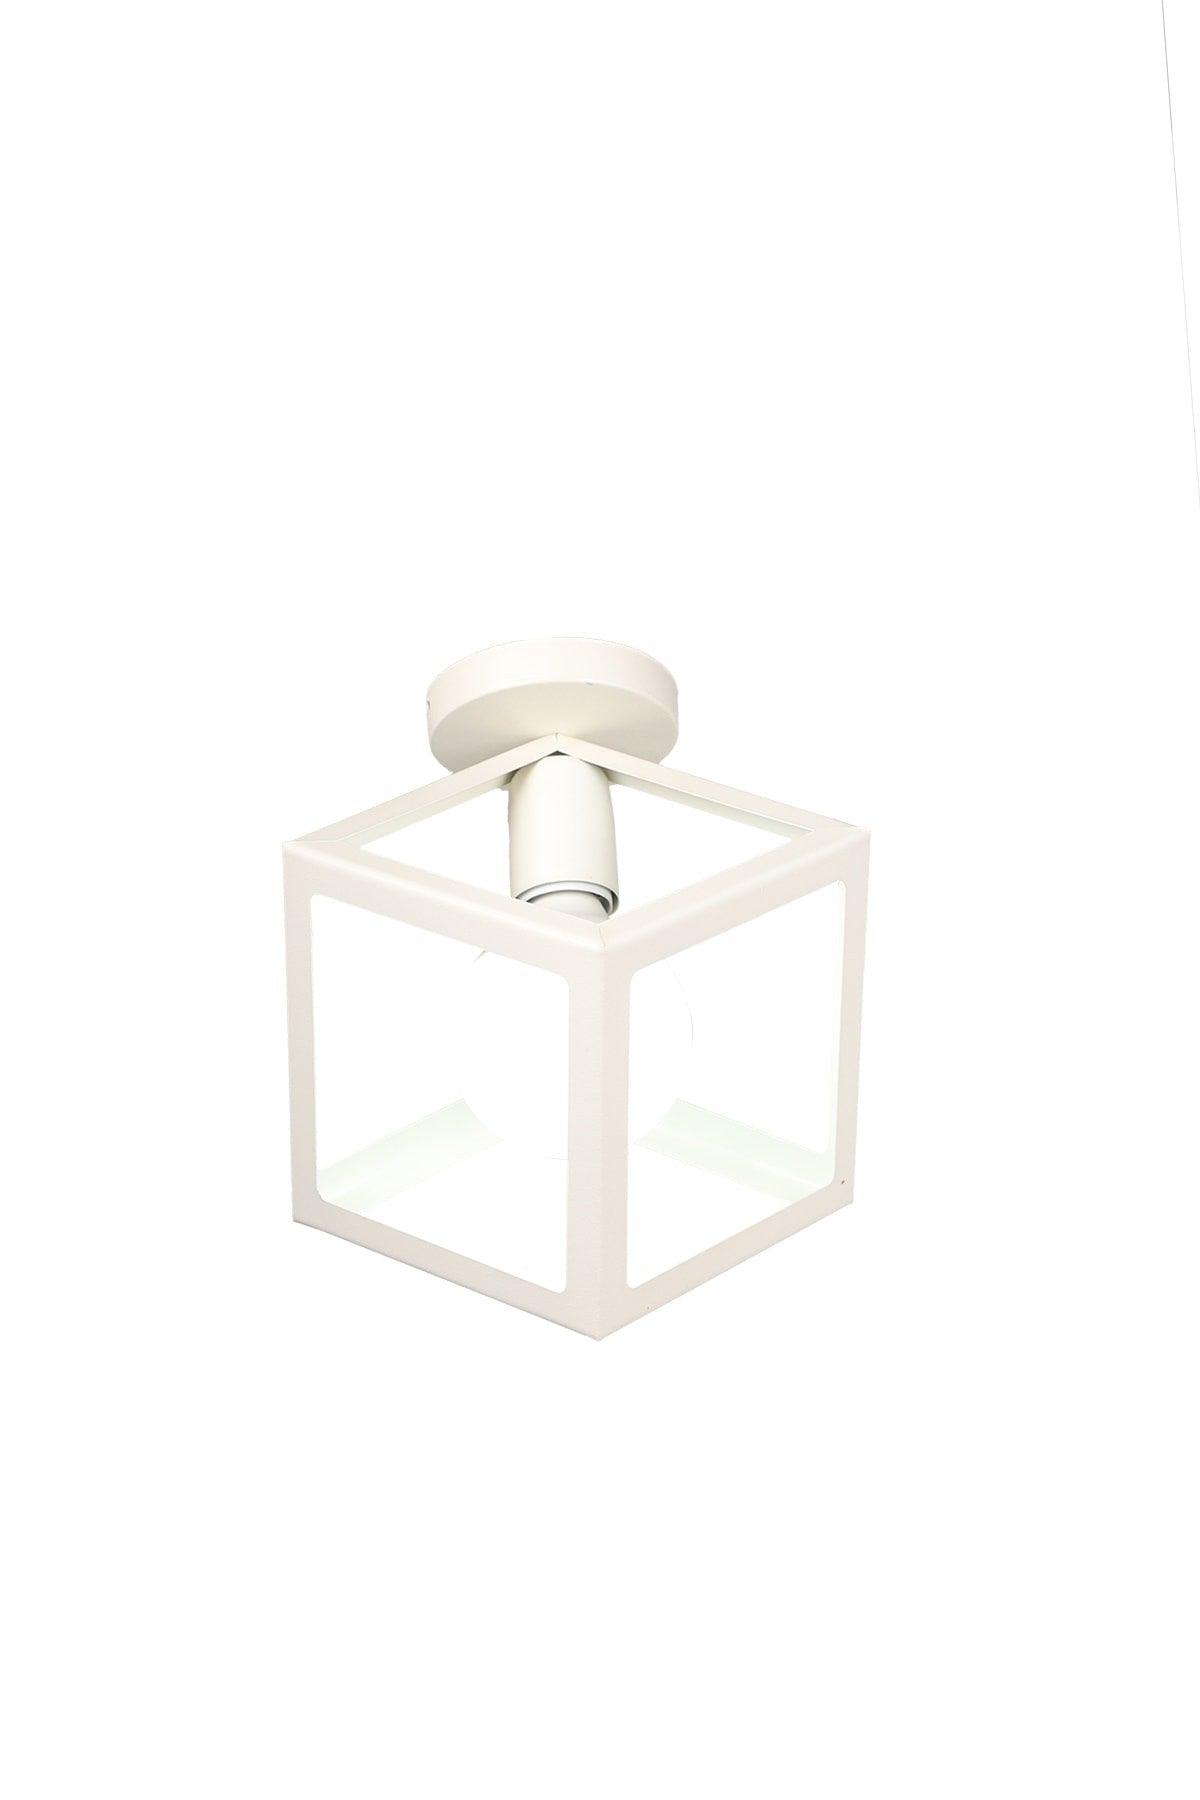 Cube Single White Ceiling Mount Chandelier - Swordslife